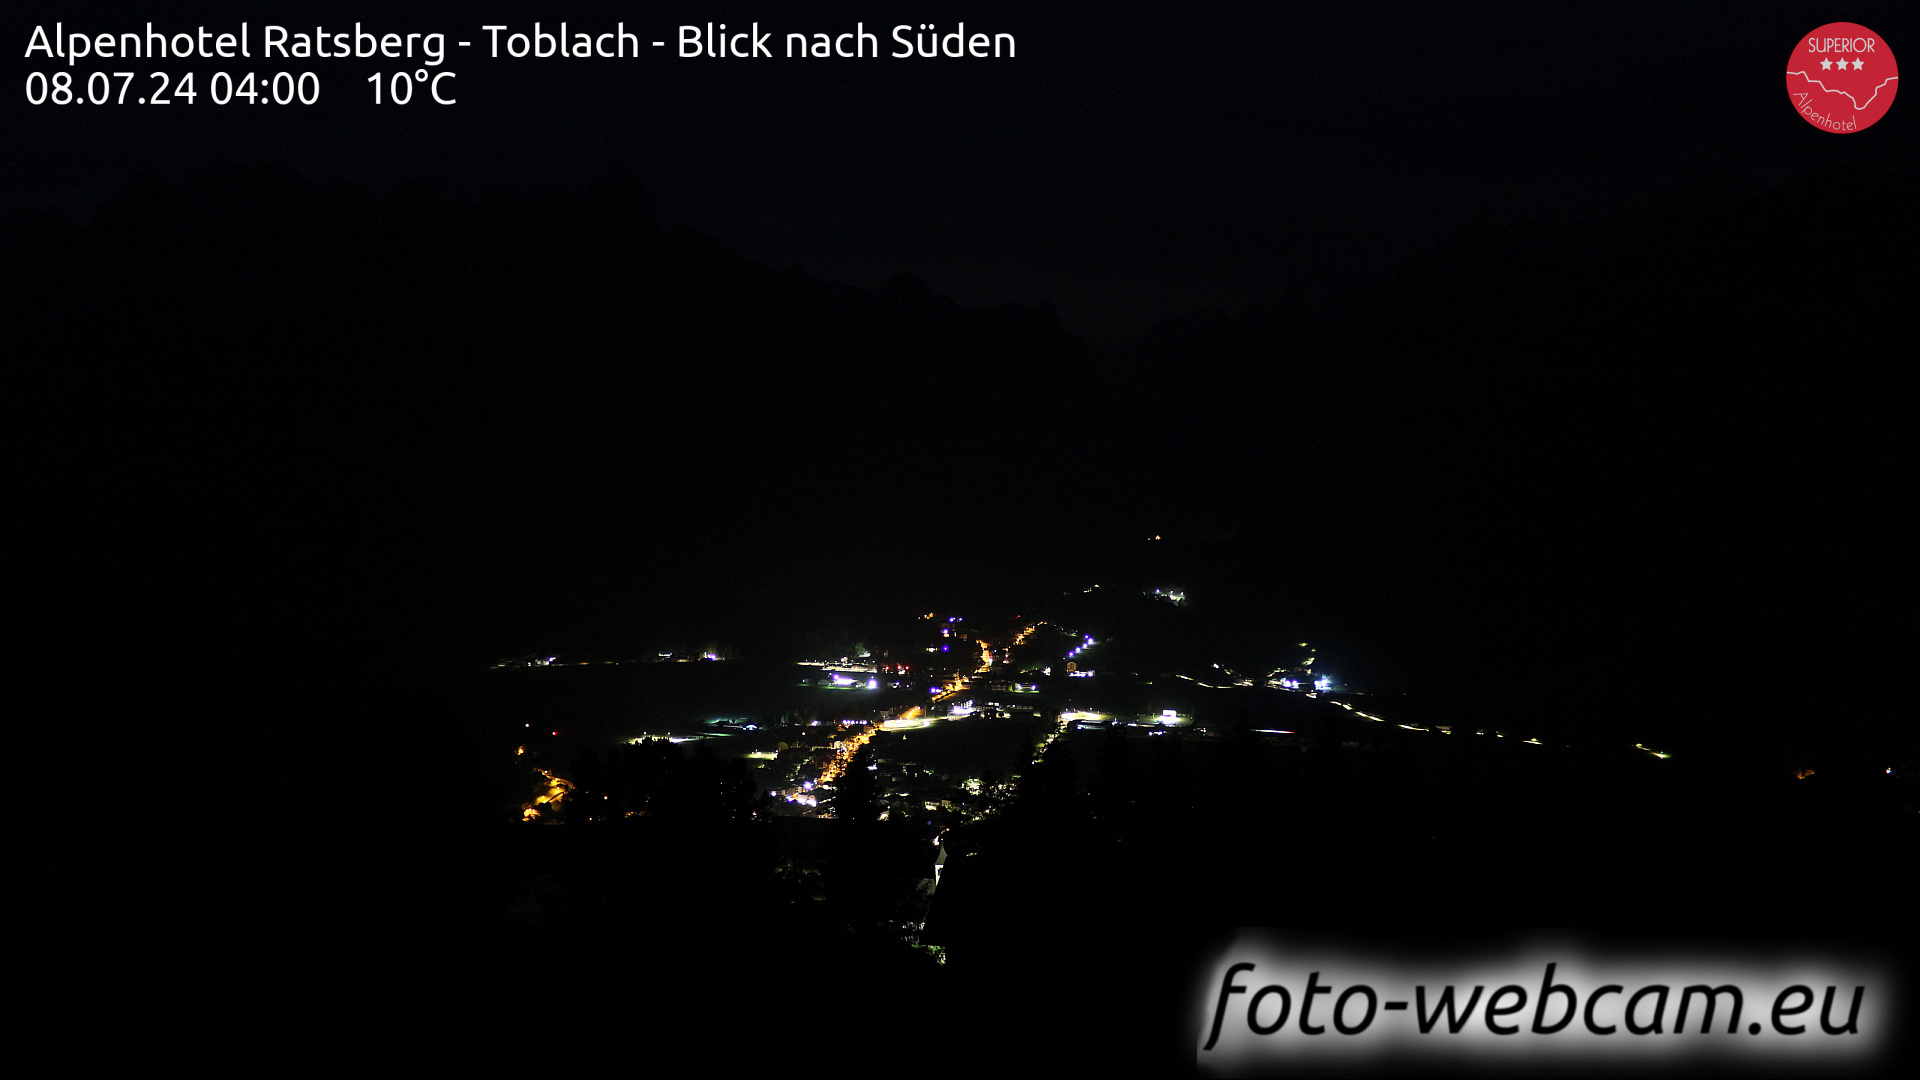 Toblach (Dolomites) Thu. 04:03